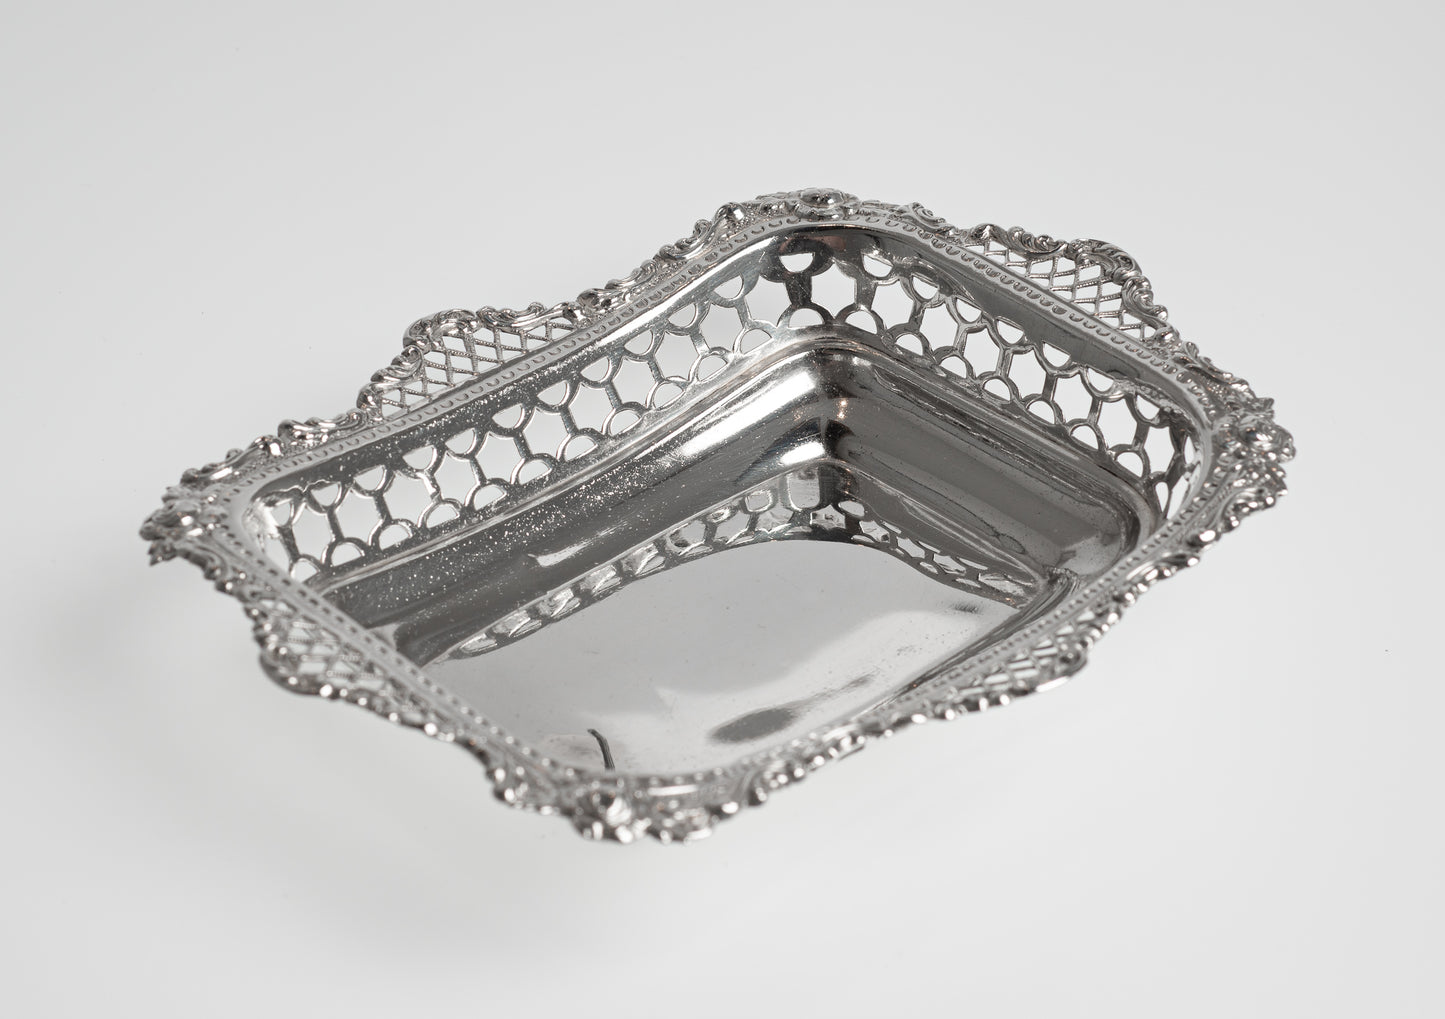 Antique Silver Bonbon Dish - William Comyns London 1897 Pierced Sweetmeat (Code 2321)